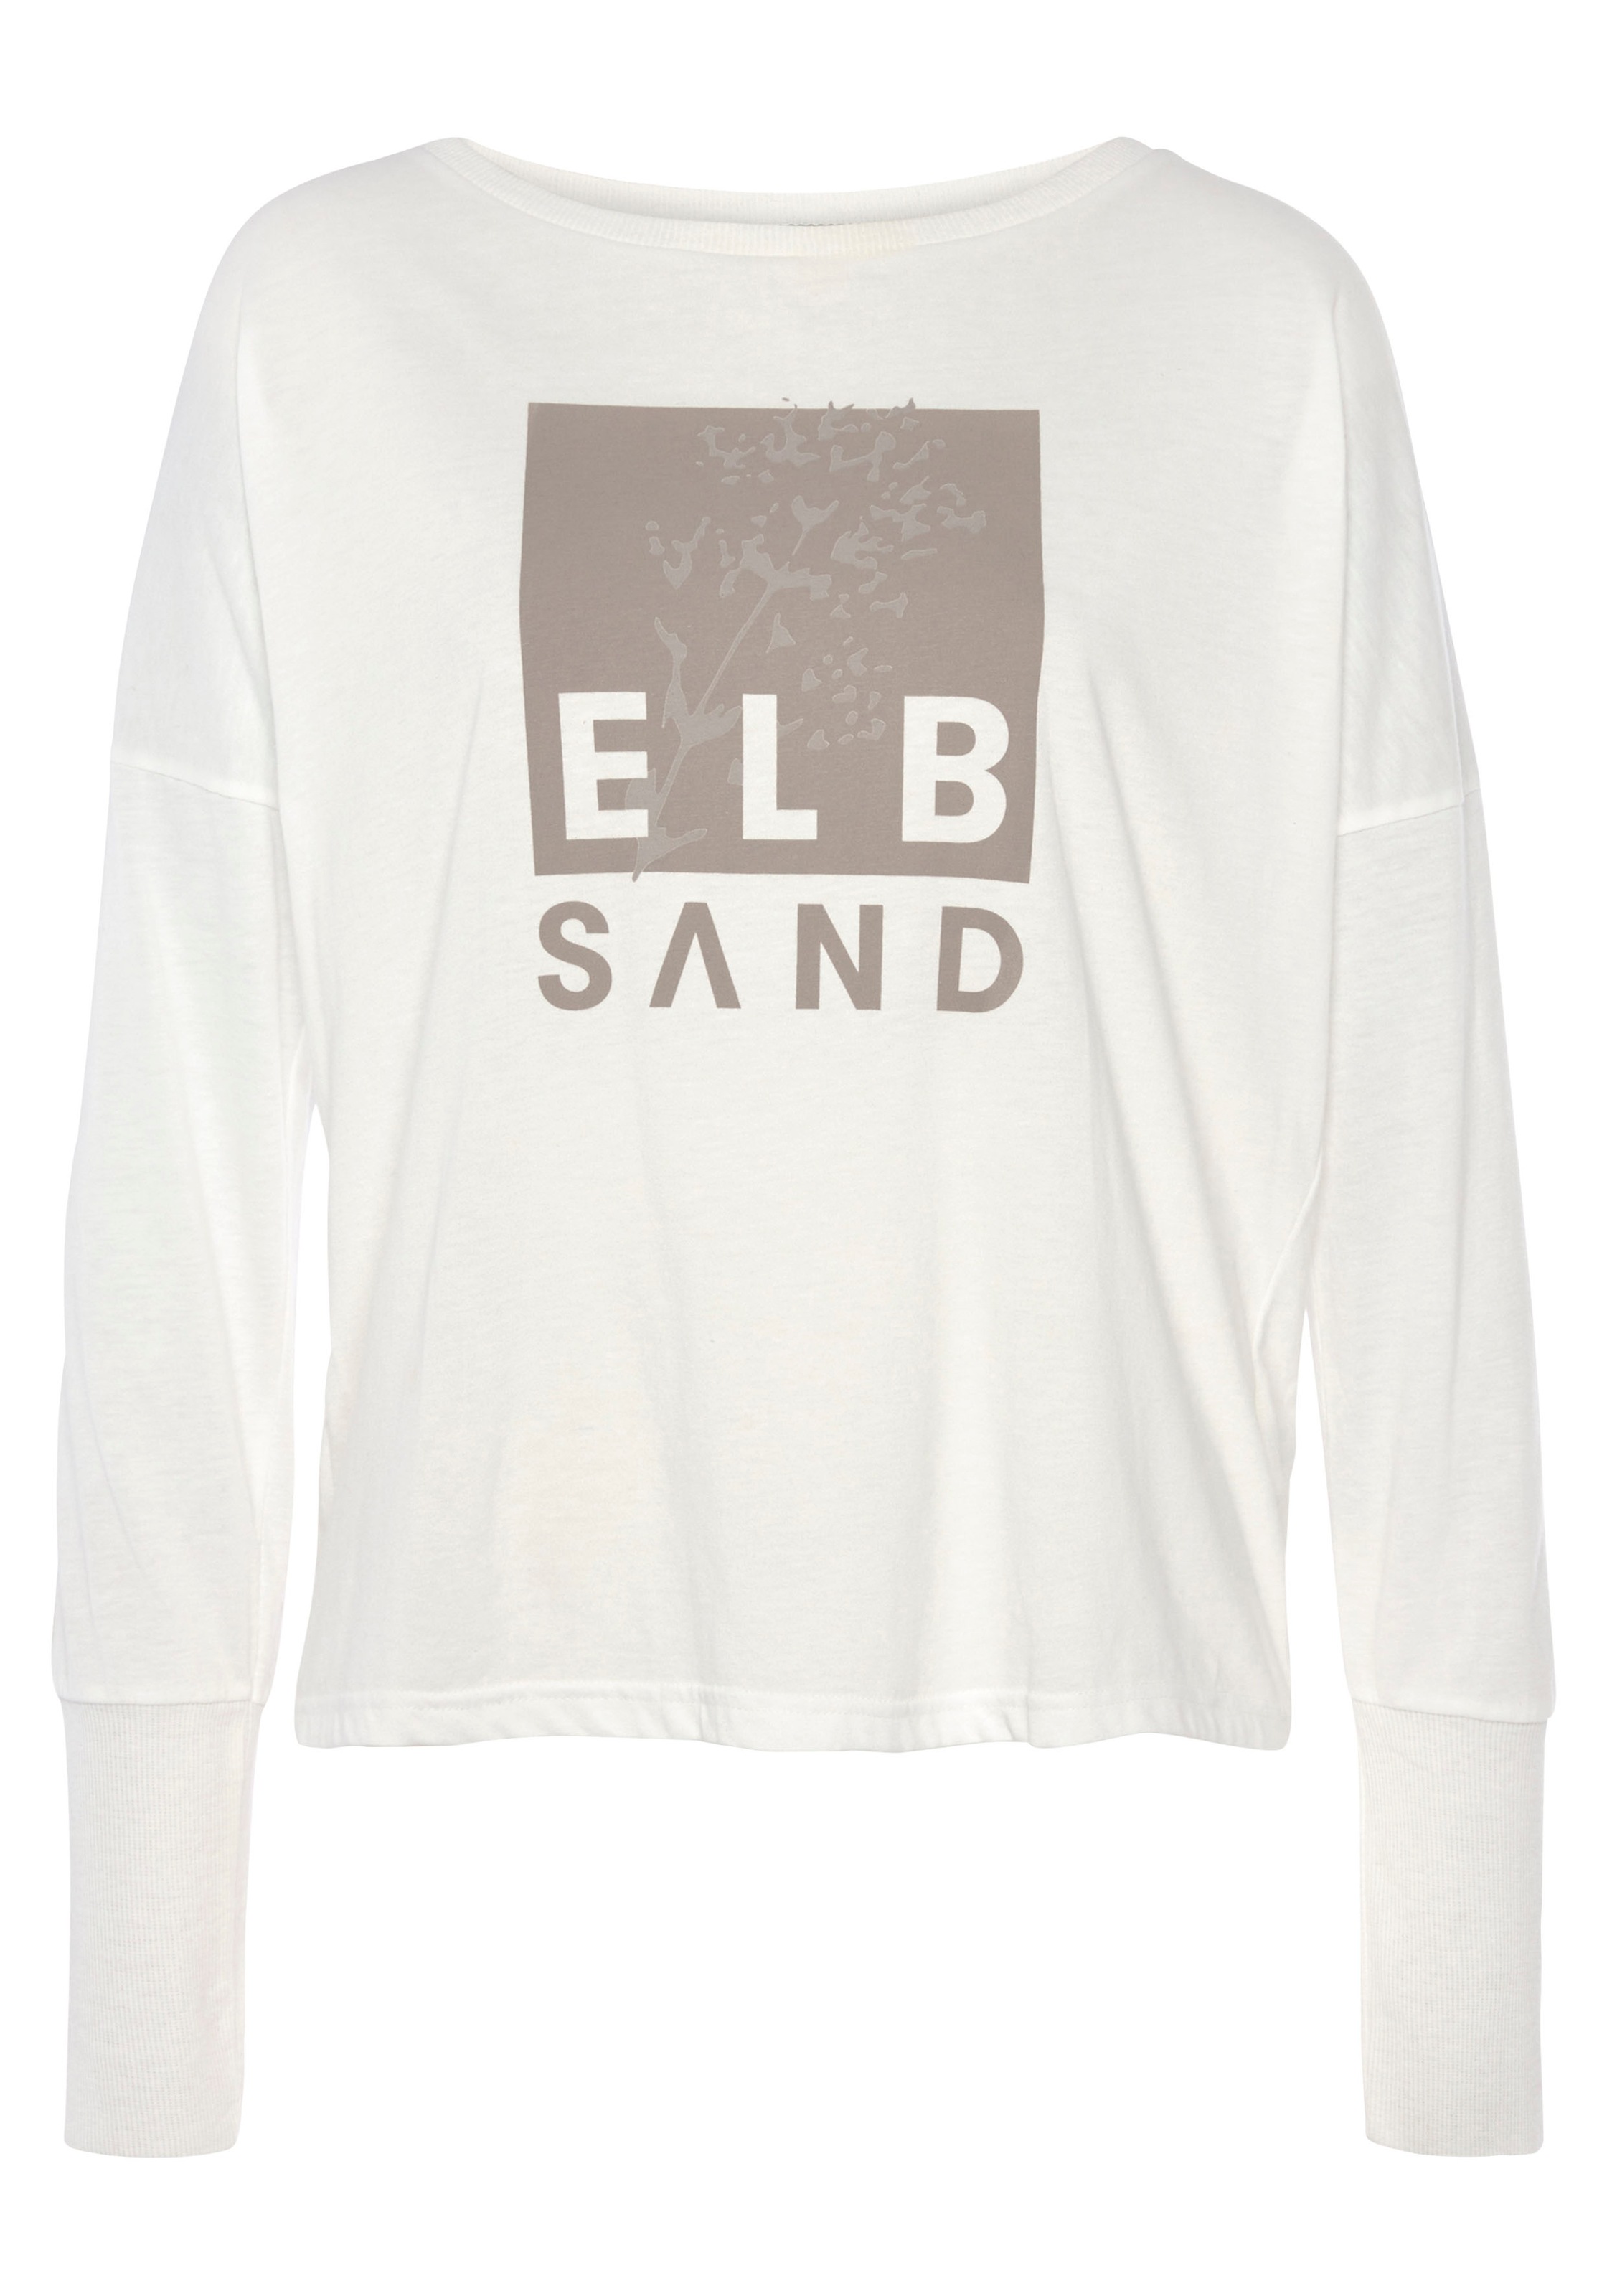 Elbsand Langarmshirt, mit Logodruck, Baumwoll-Mix, sportlich-casual